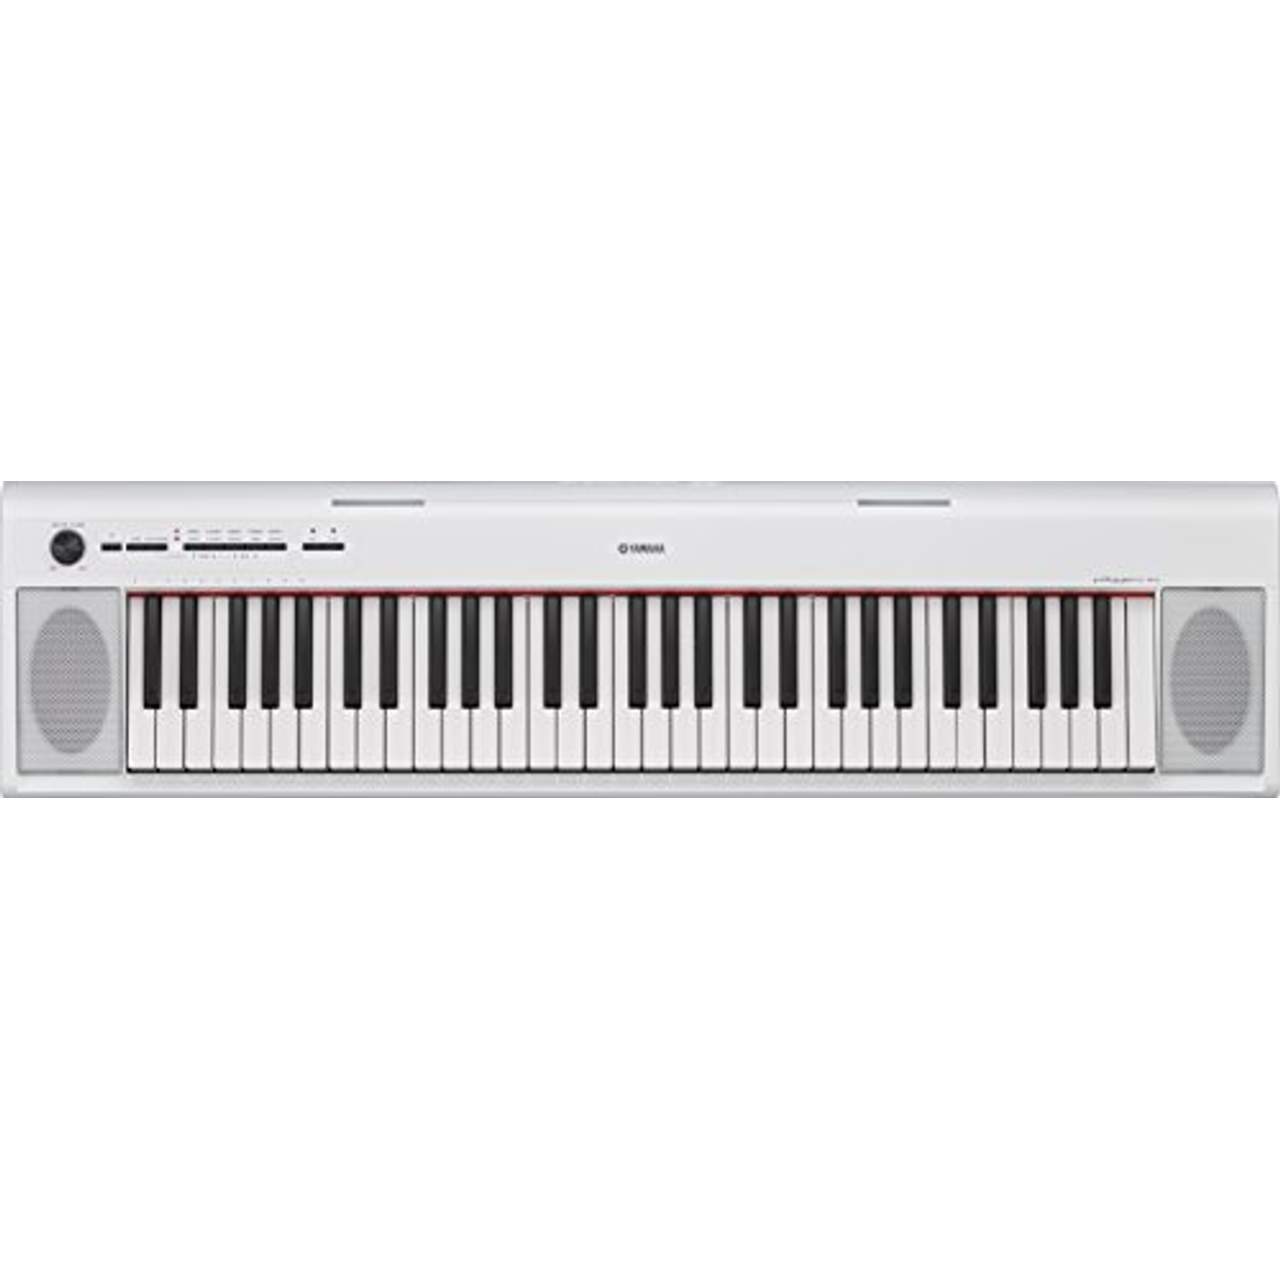 Yamaha Keyboard Piaggero NP-12WH